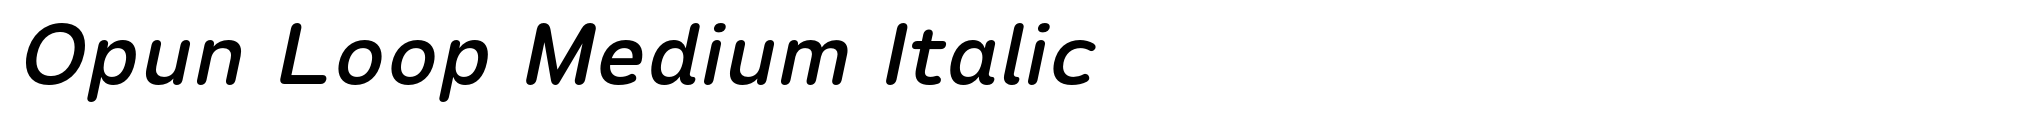 Opun Loop Medium Italic image